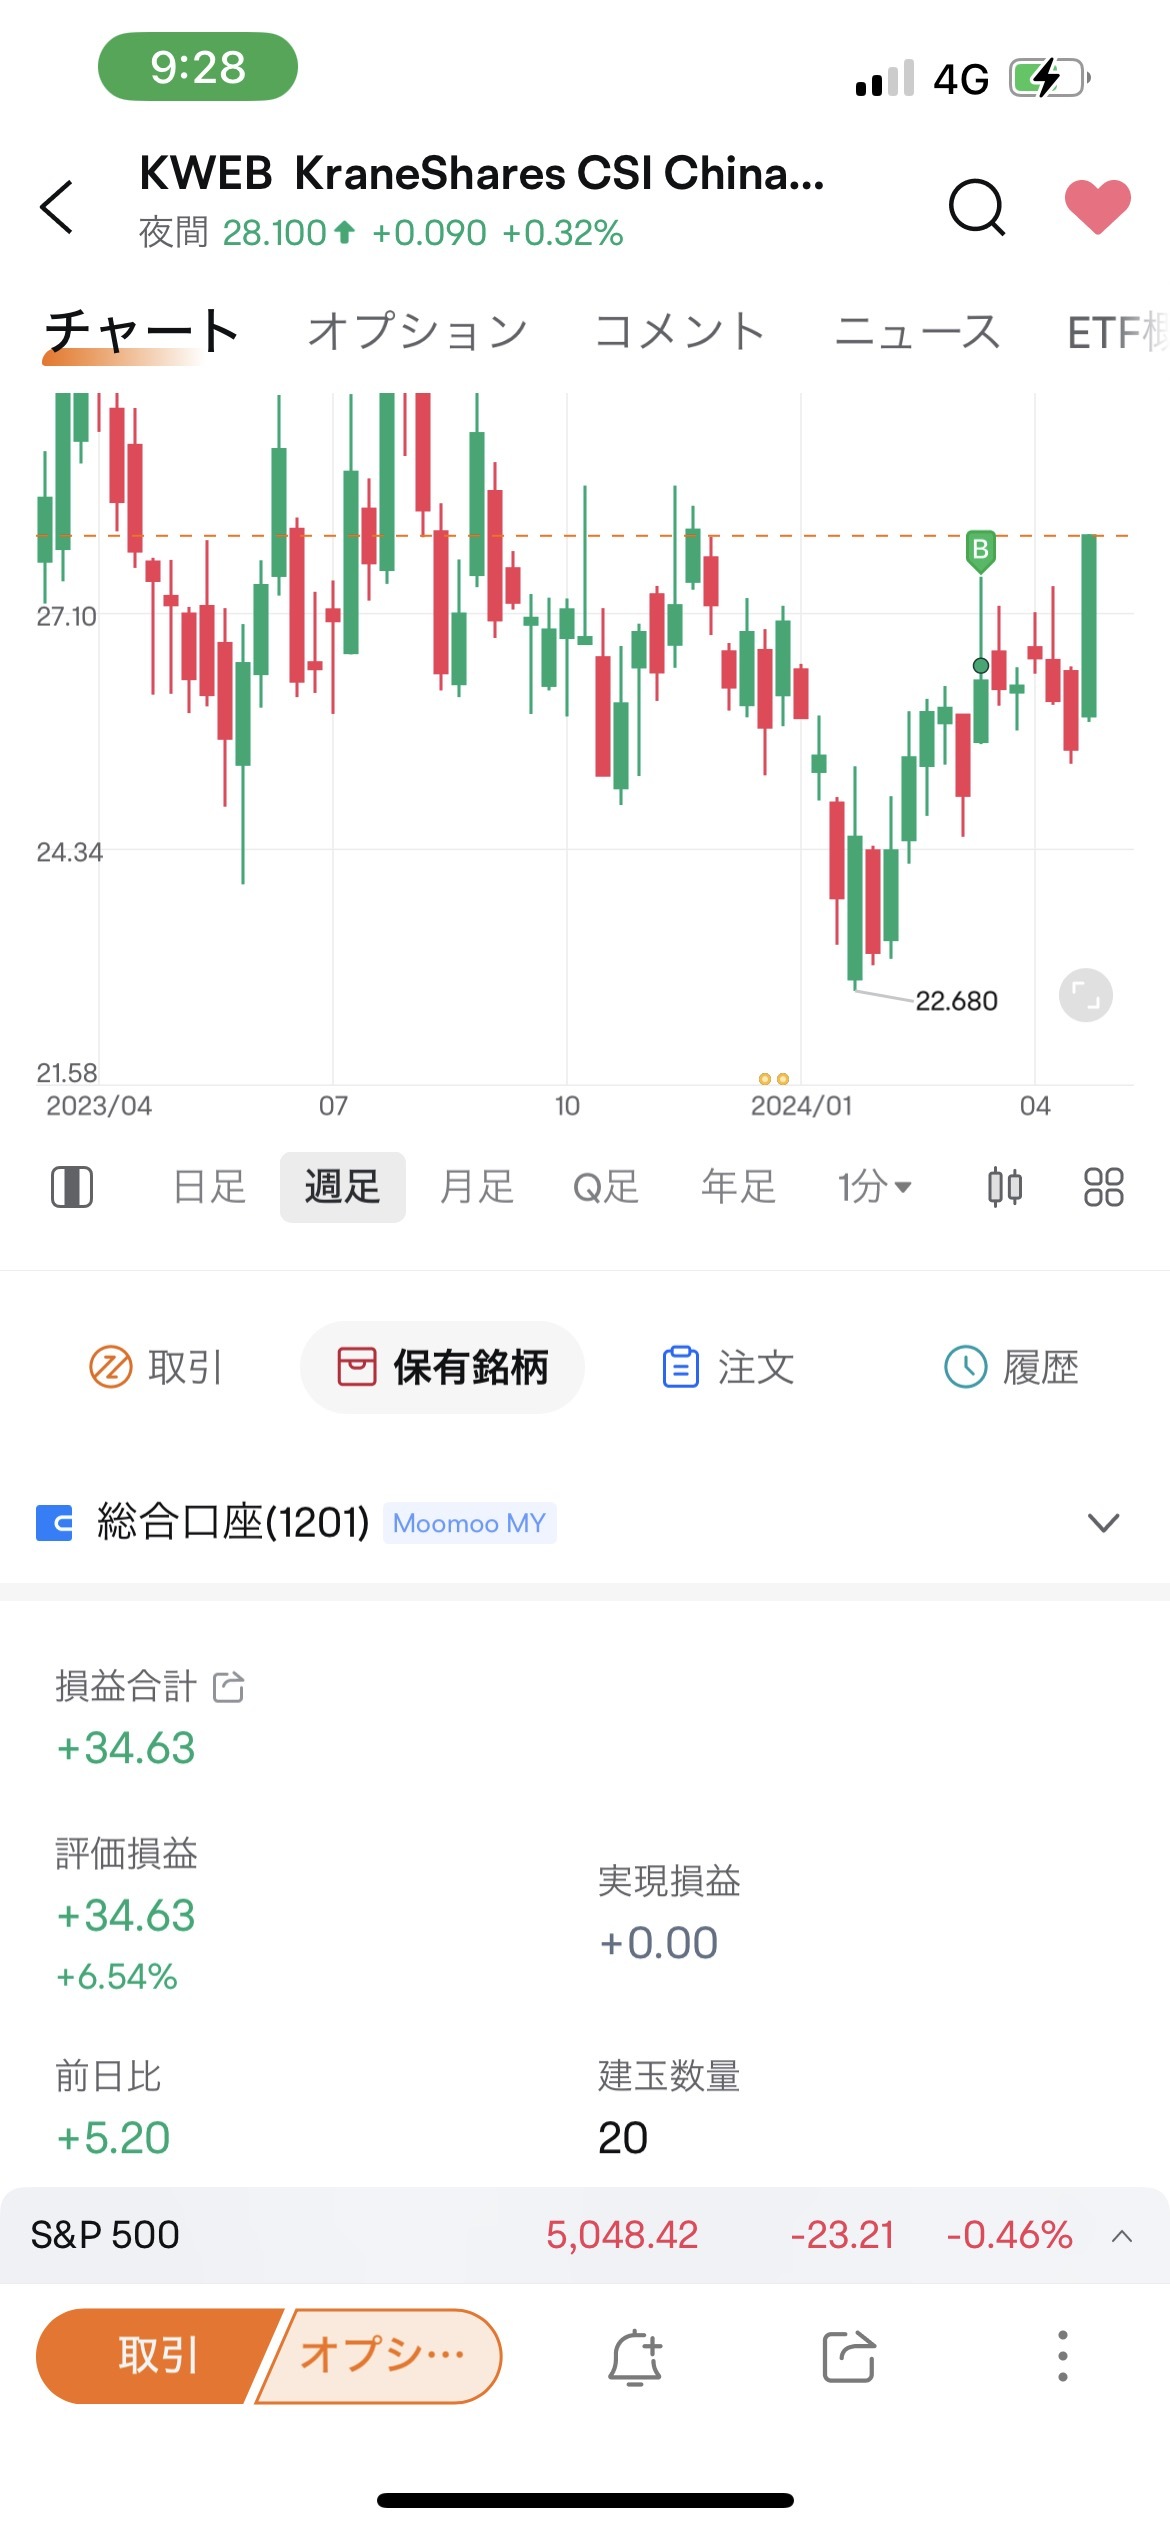 $KraneShares中國海外互聯網ETF (KWEB.US)$ 上升 6.54%